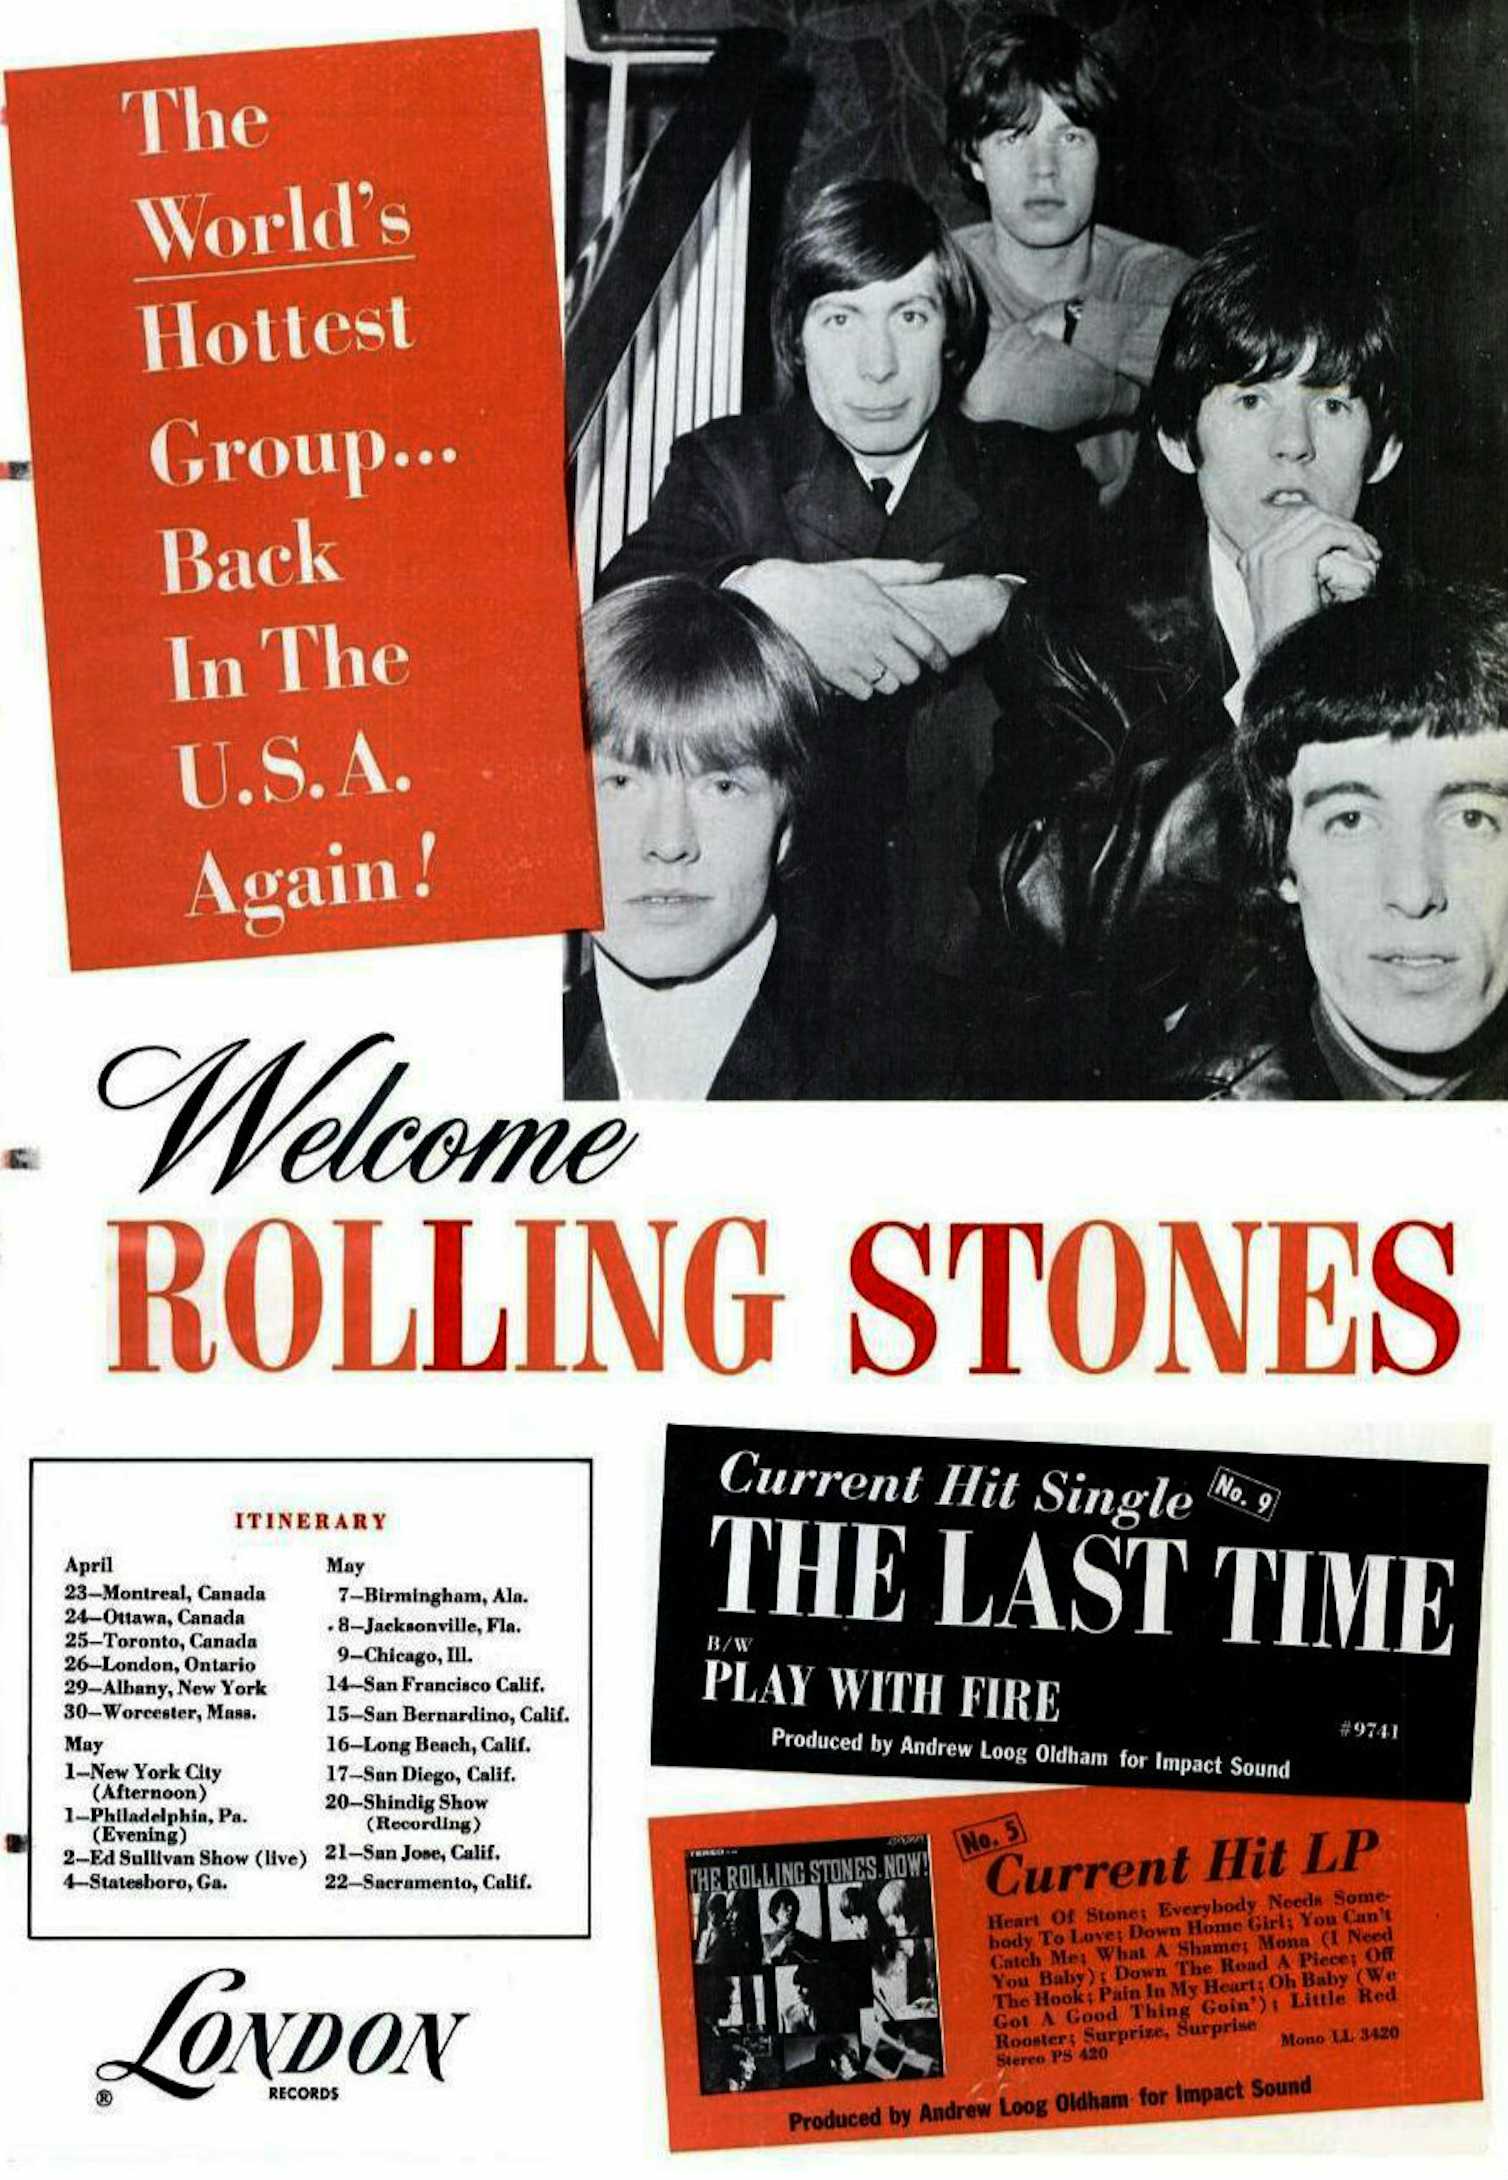 1965 rolling stones tour